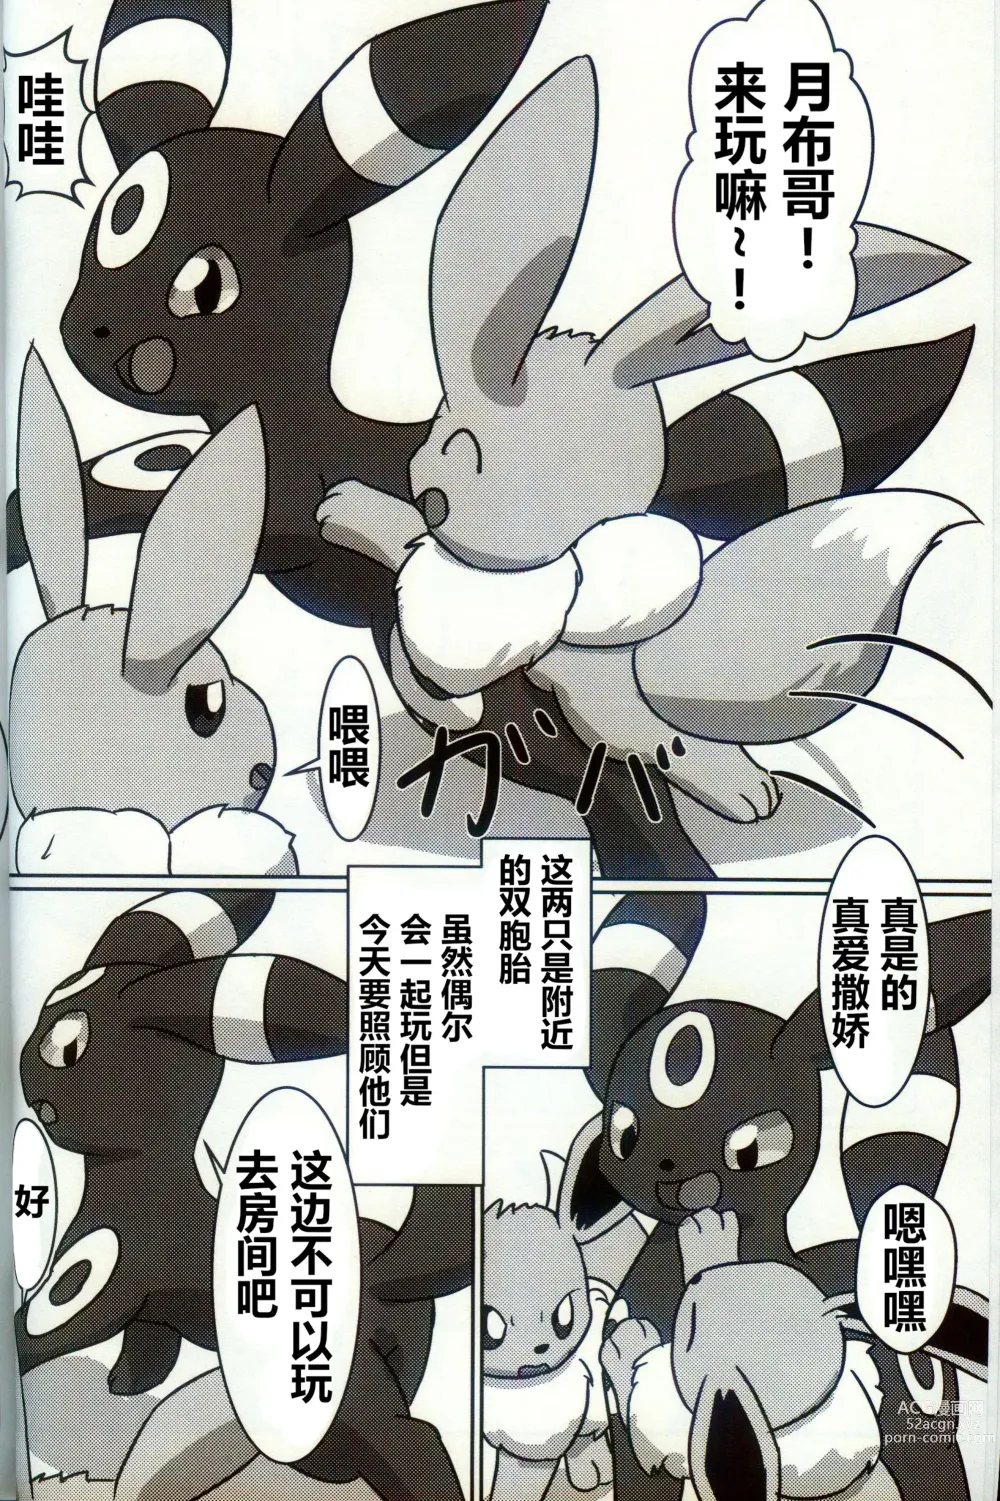 Page 6 of doujinshi 被拜托照顾附近的双胞胎发生了不得了的事...